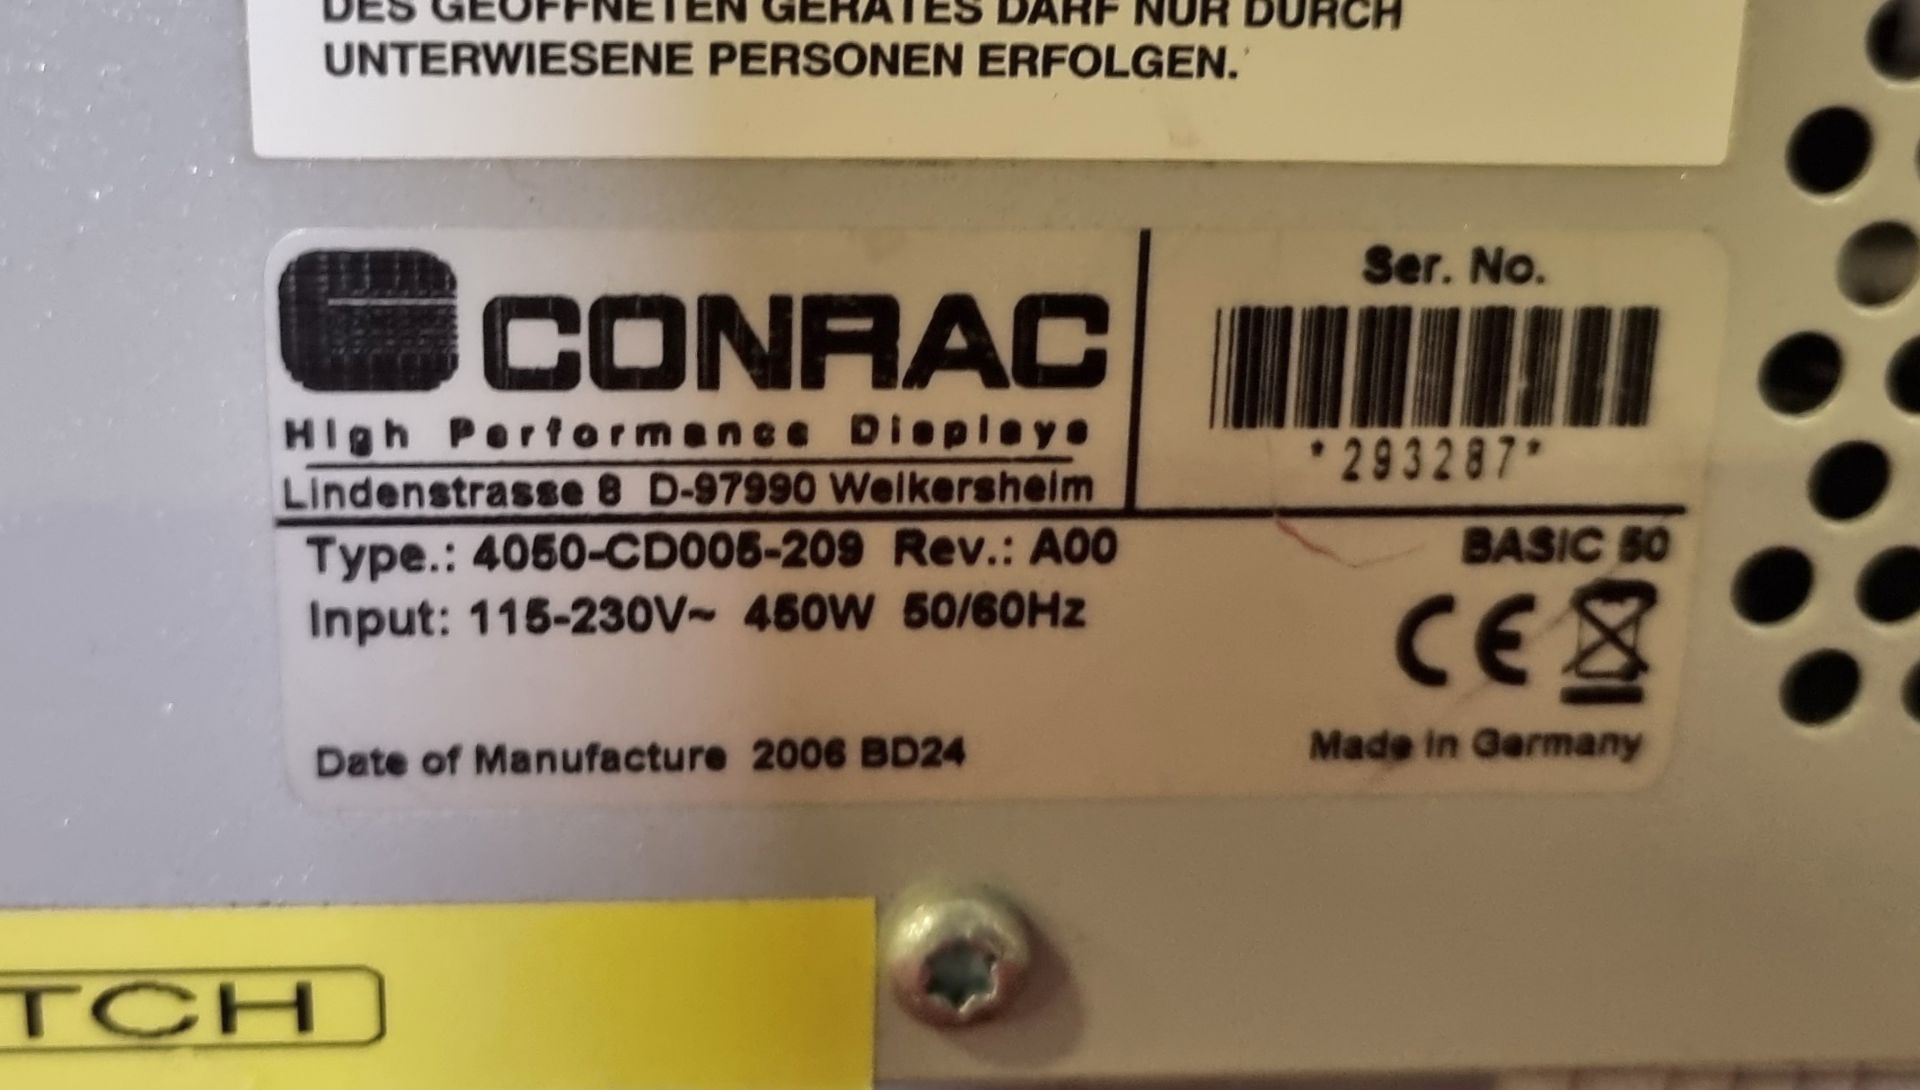 Conrac 4050-CD005-209 50 inch plasma TV - SCRATCH TO SCREEN - NO STAND OR REMOTE - Bild 3 aus 3